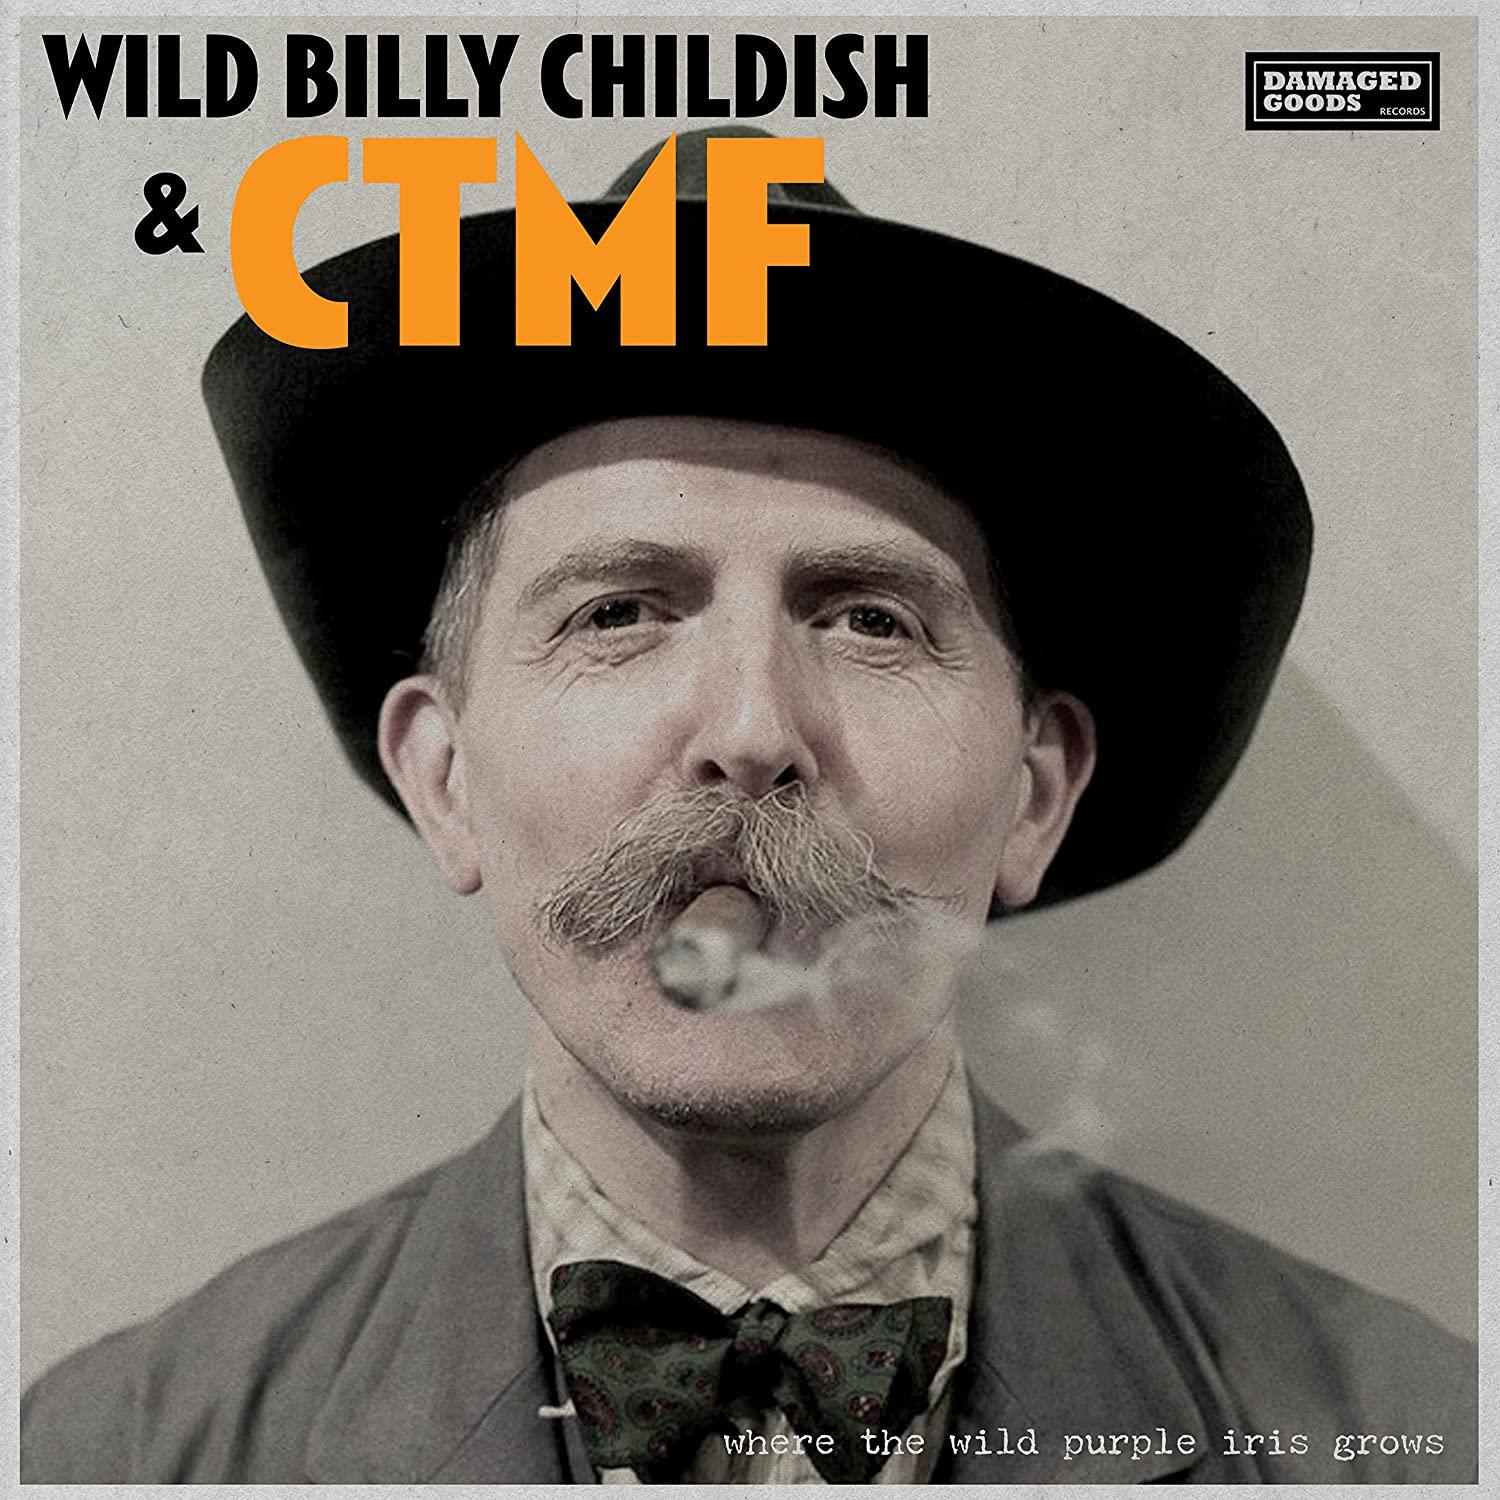 (CD) Where Grows Billy The Childish Wild Wild CTMF & - Iris Purple -